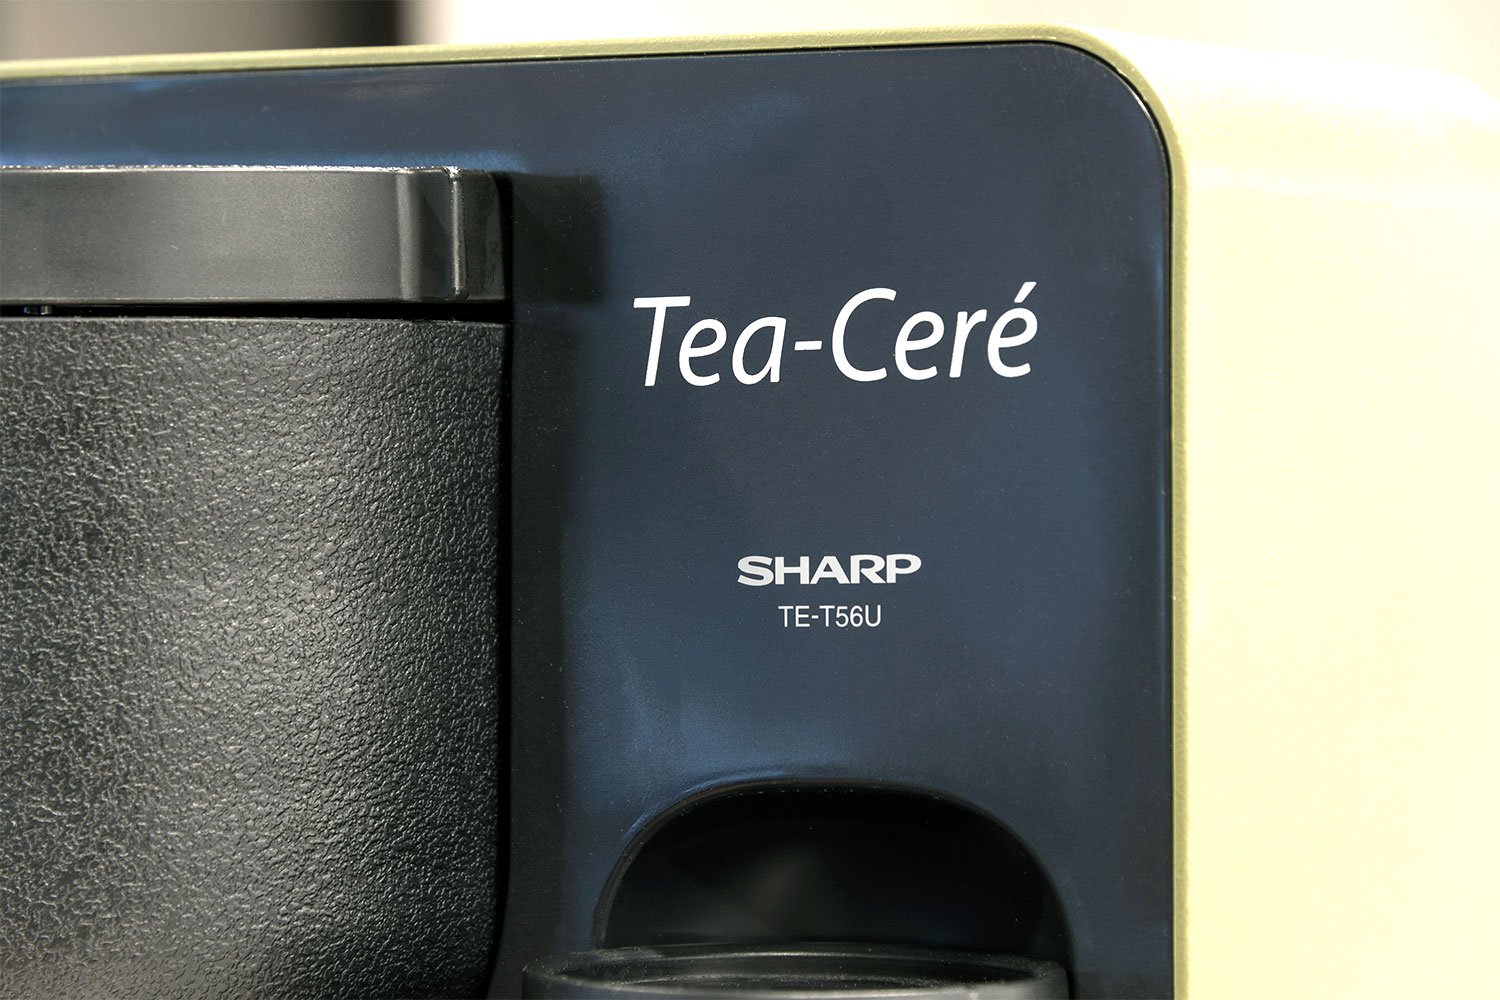 https://www.digitaltrends.com/wp-content/uploads/2017/03/Sharp-Tea-Cere-Matcha-maker-logo.jpg?fit=1500%2C1000&p=1